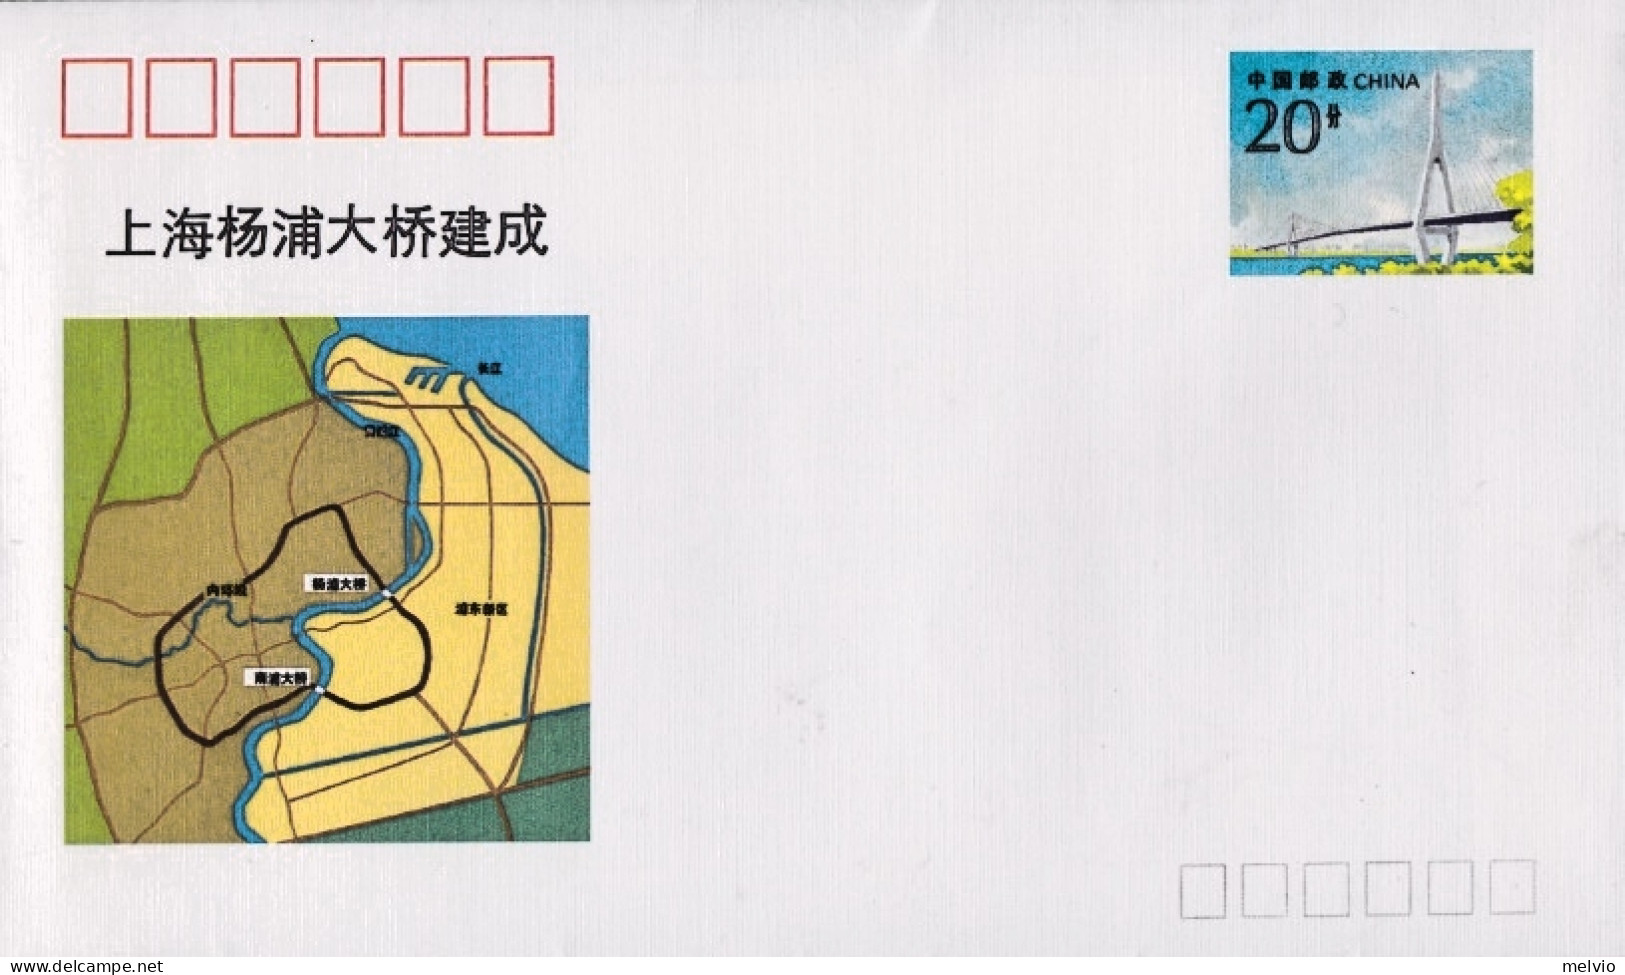 1993-Cina China JF40, Completion Of The Shanghai Yangpu Bridge - Lettres & Documents